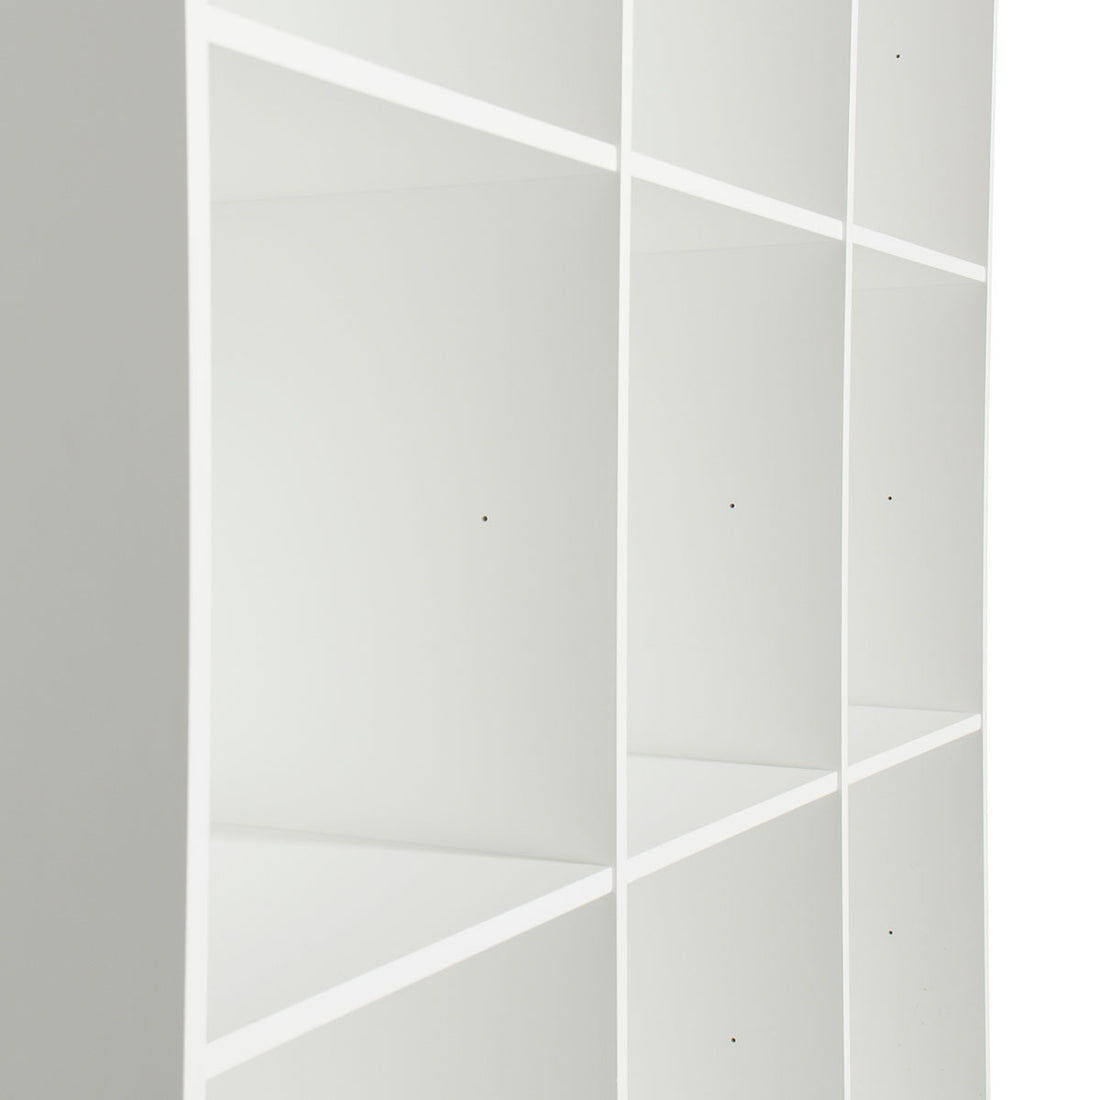 oliver-furniture-wood-shelving-unit-3x5-vertical-shelf-with-base- (3)